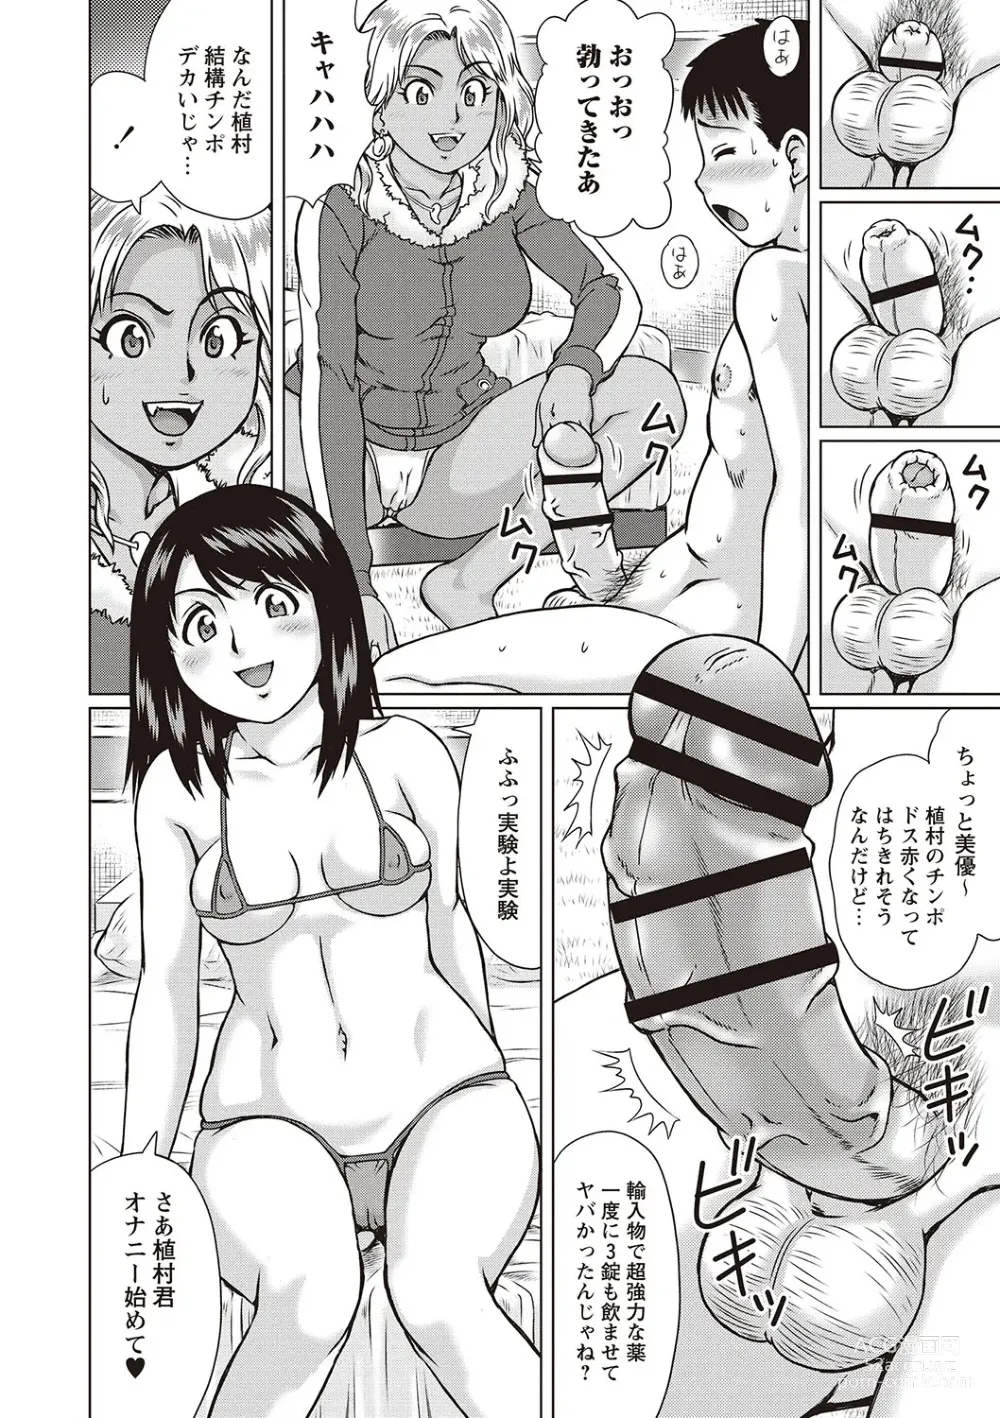 Page 93 of manga Doutei Revenge SEX